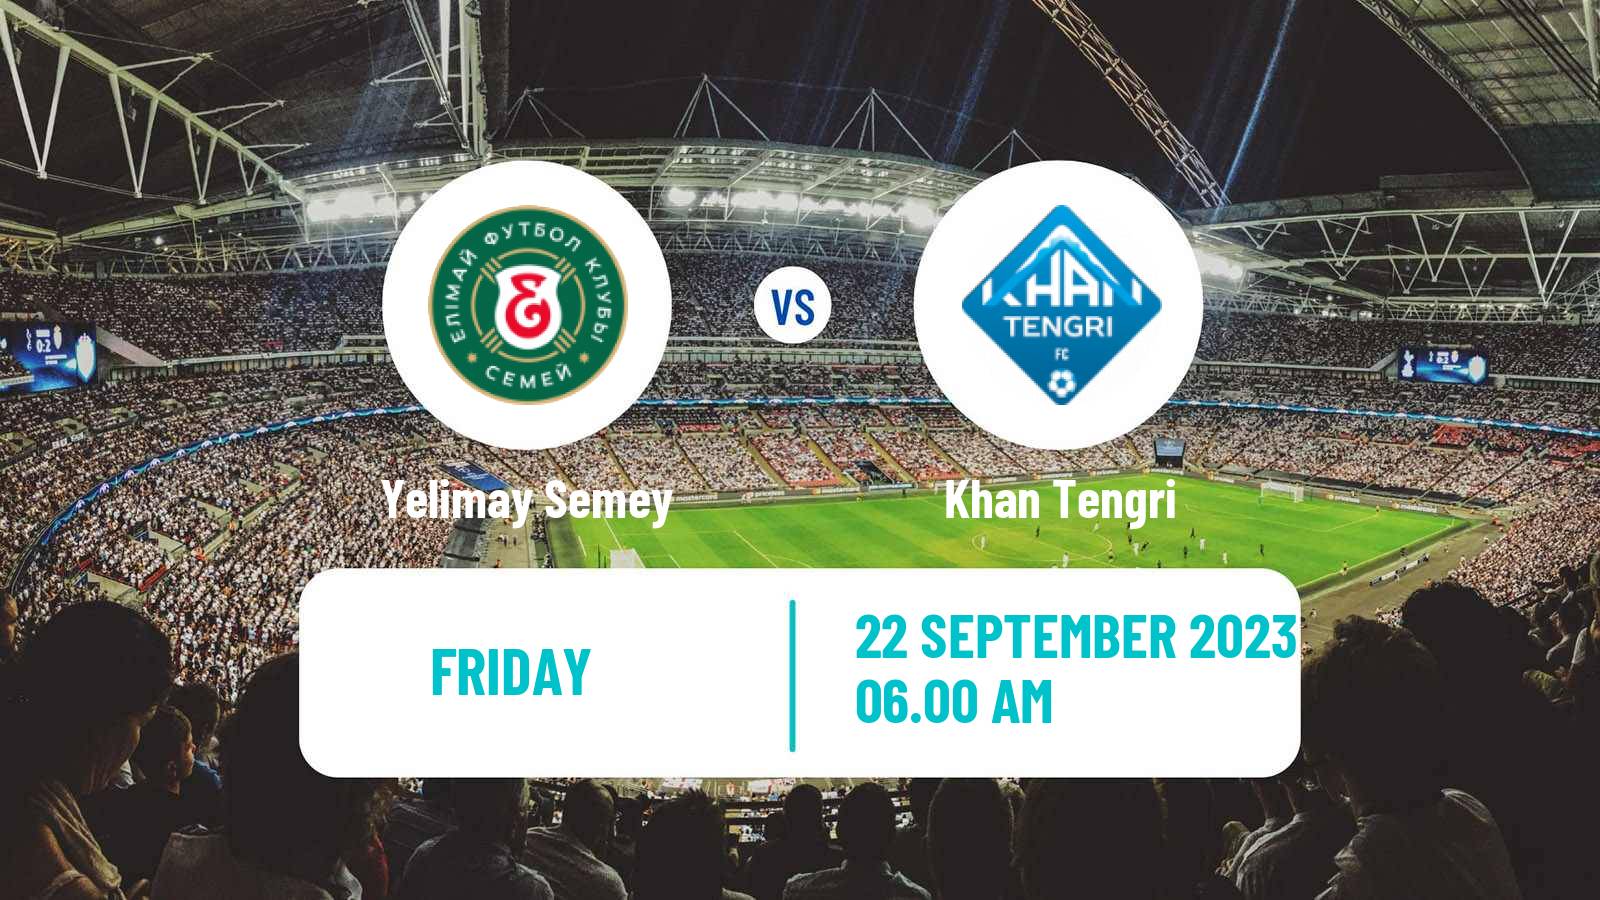 Soccer Kazakh First Division Yelimay Semey - Khan Tengri